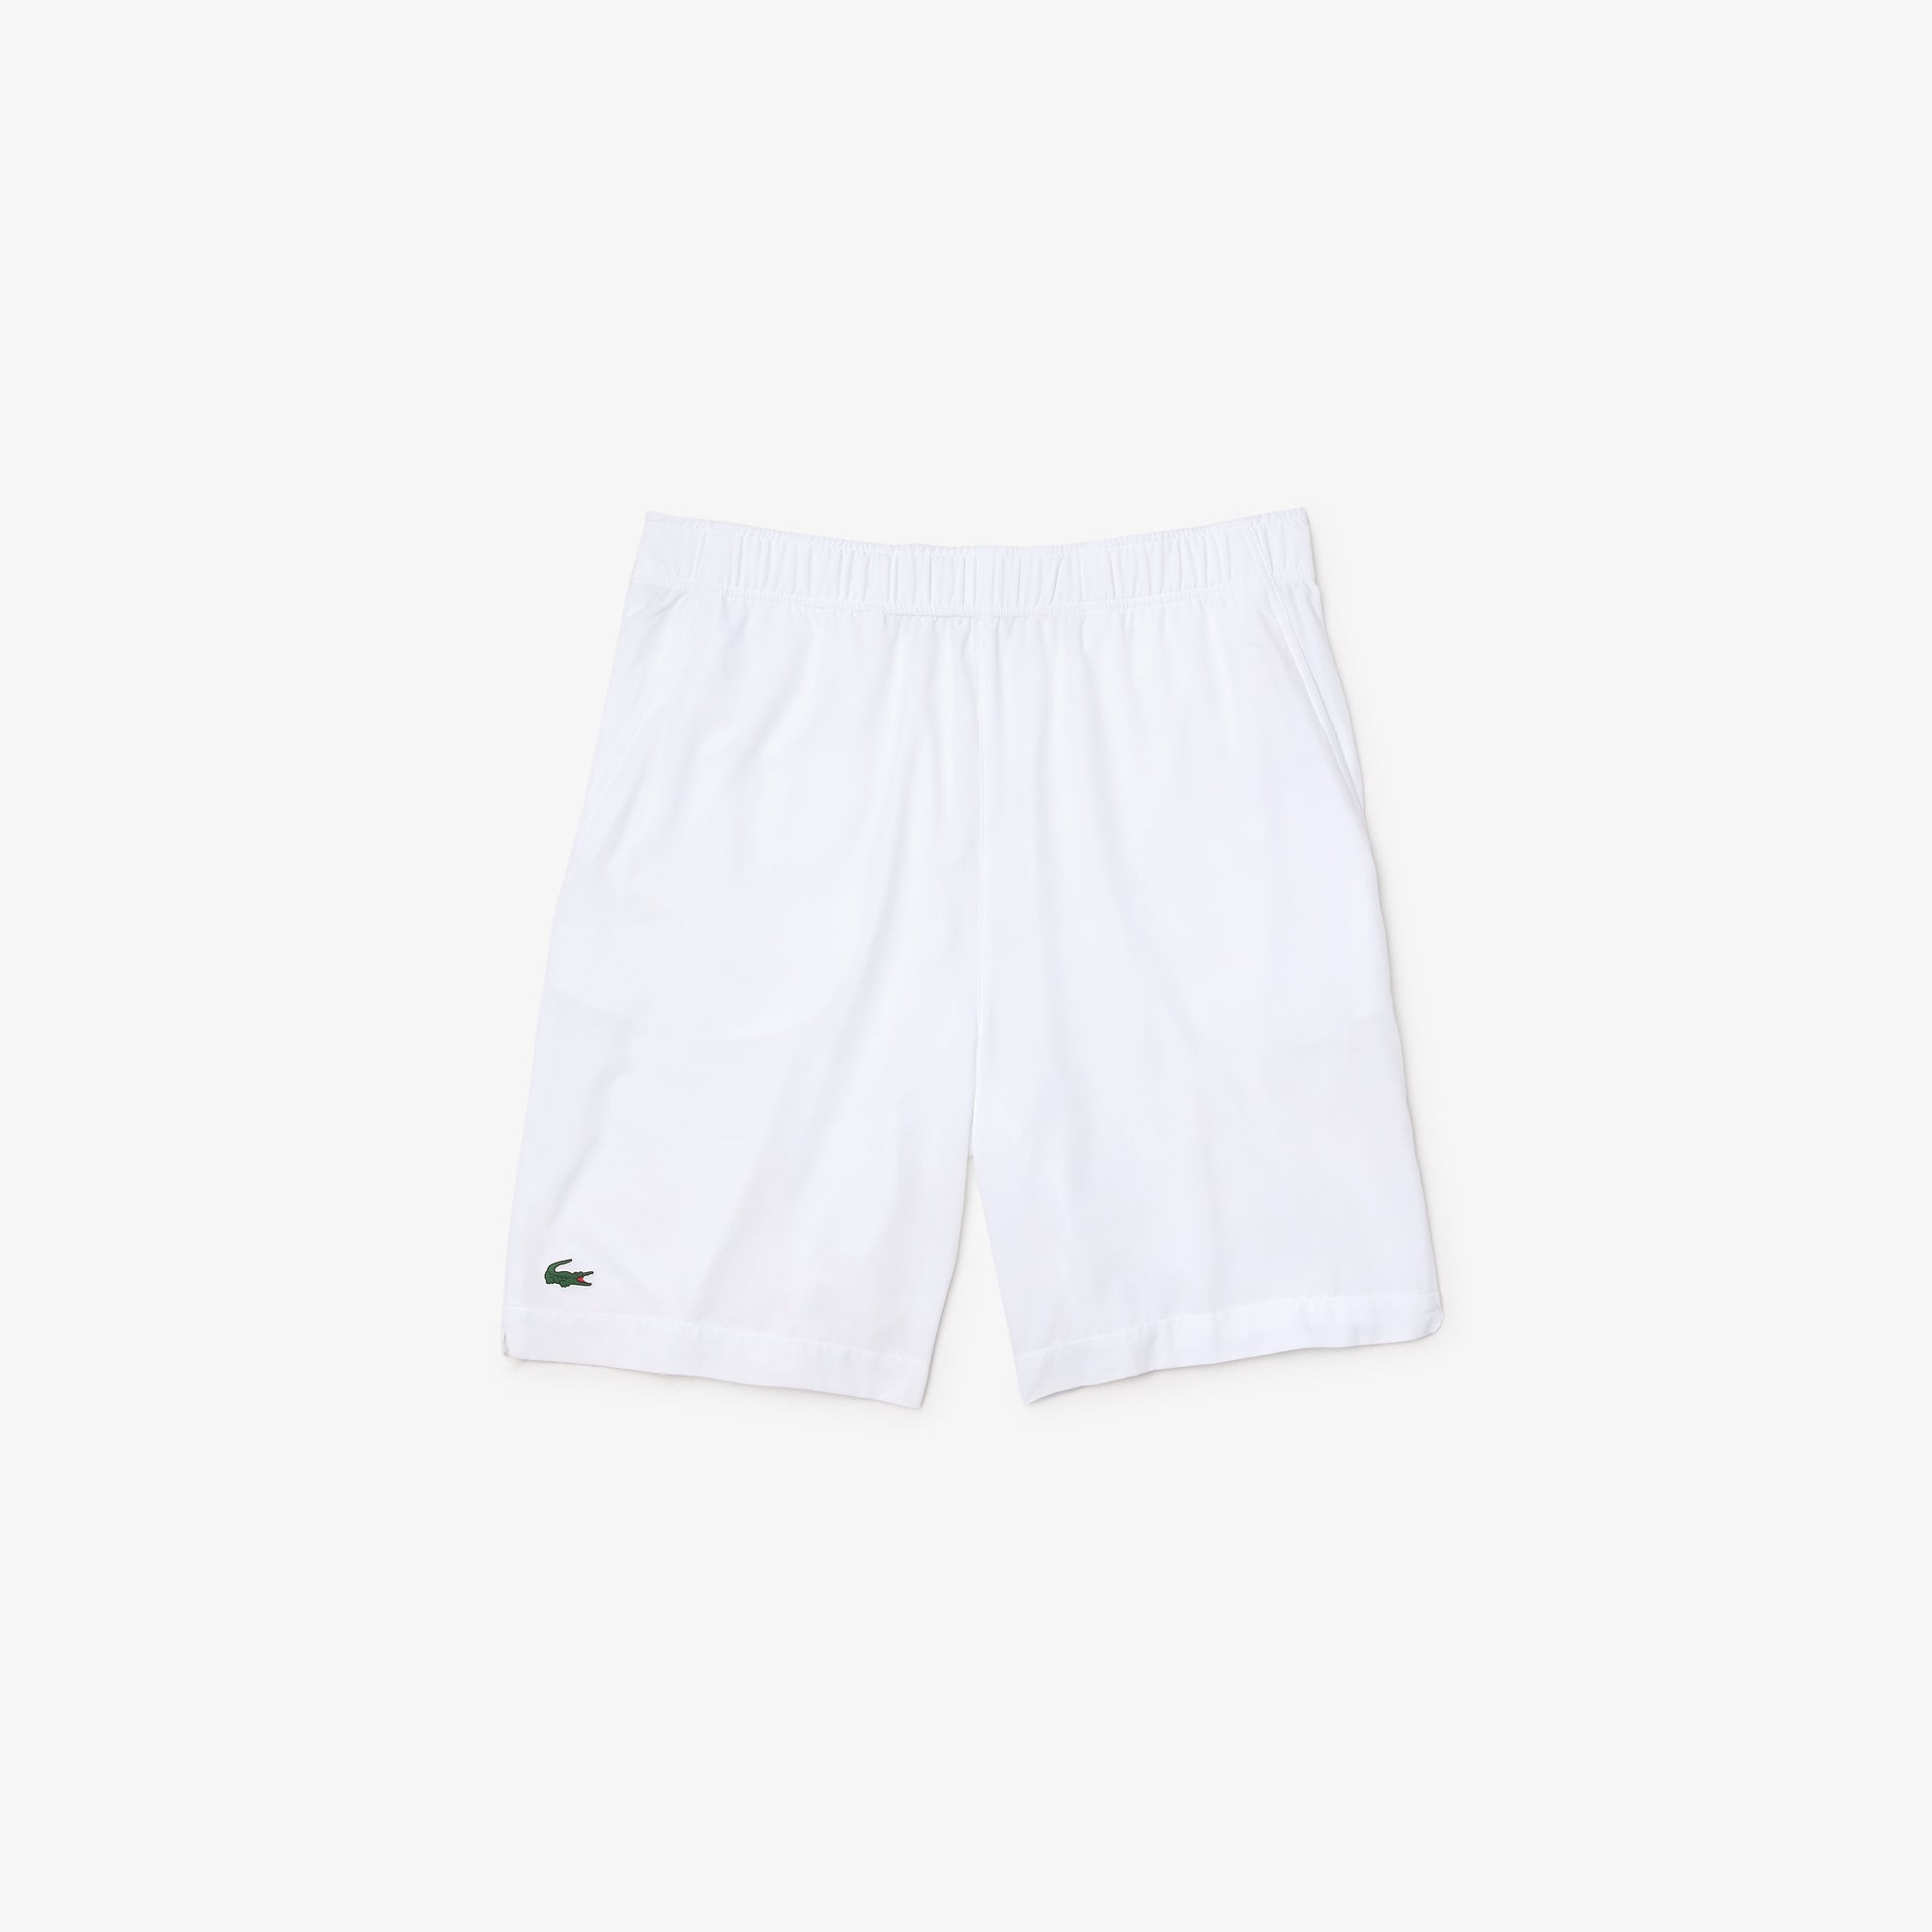 Lacoste Shorts (Blanc/Navy) - XL